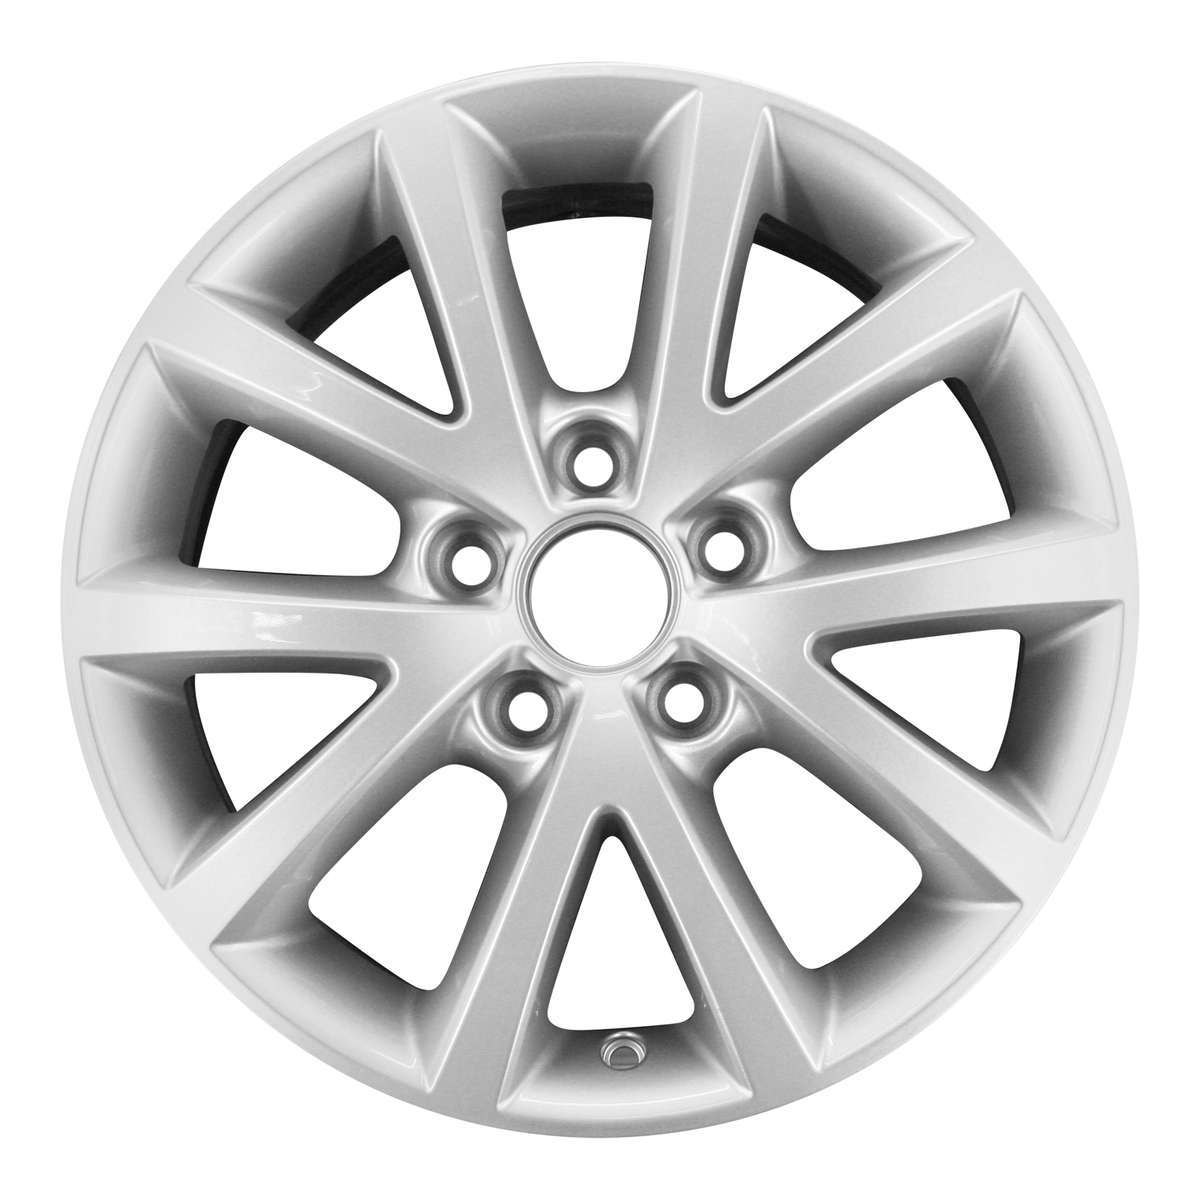 2011 Volkswagen Jetta New 16" Replacement Wheel Rim RW69897S